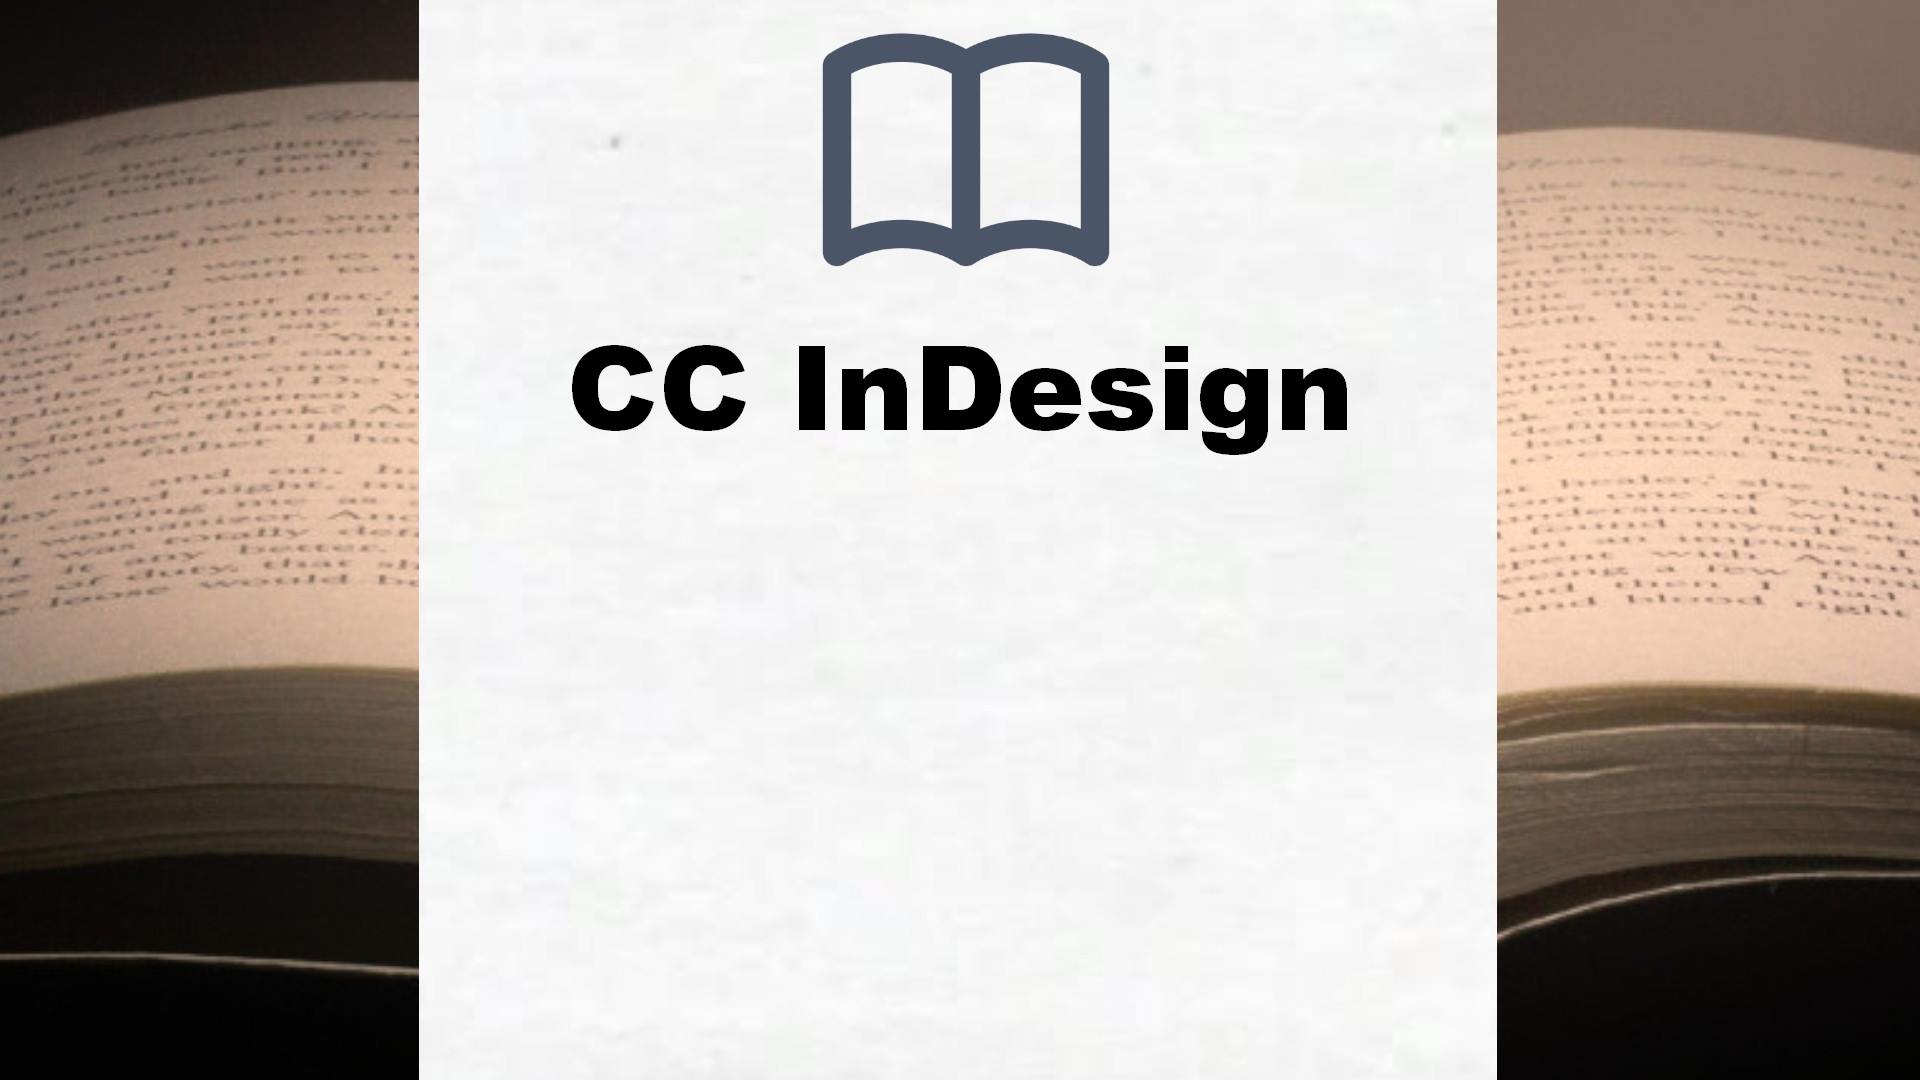 Bücher über CC InDesign